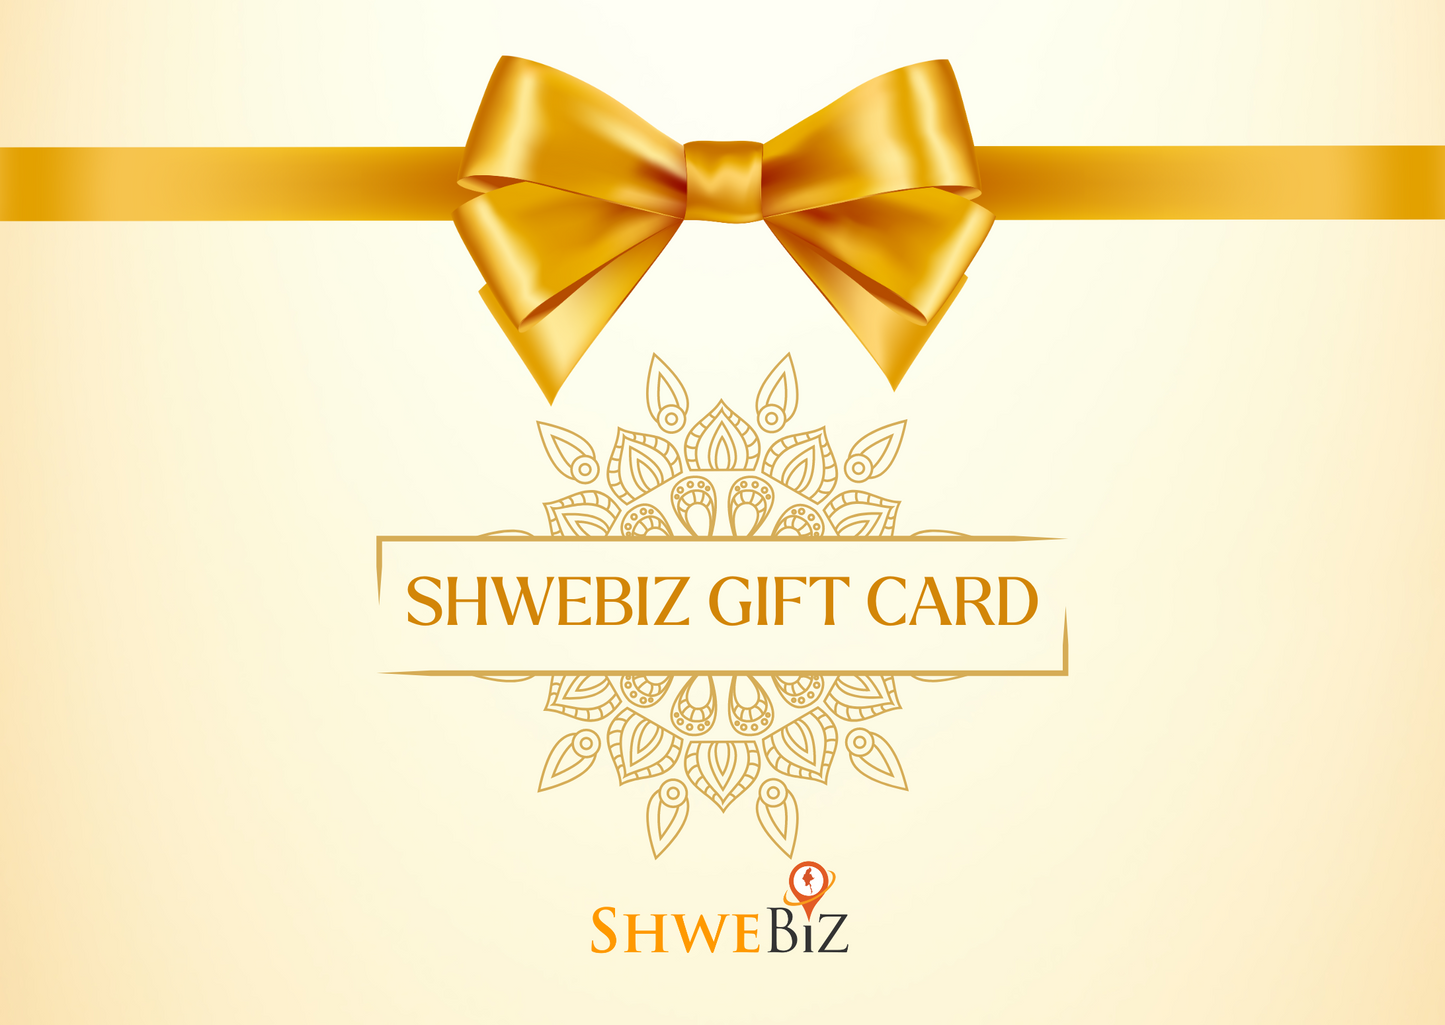 ShweBiz Gift Card